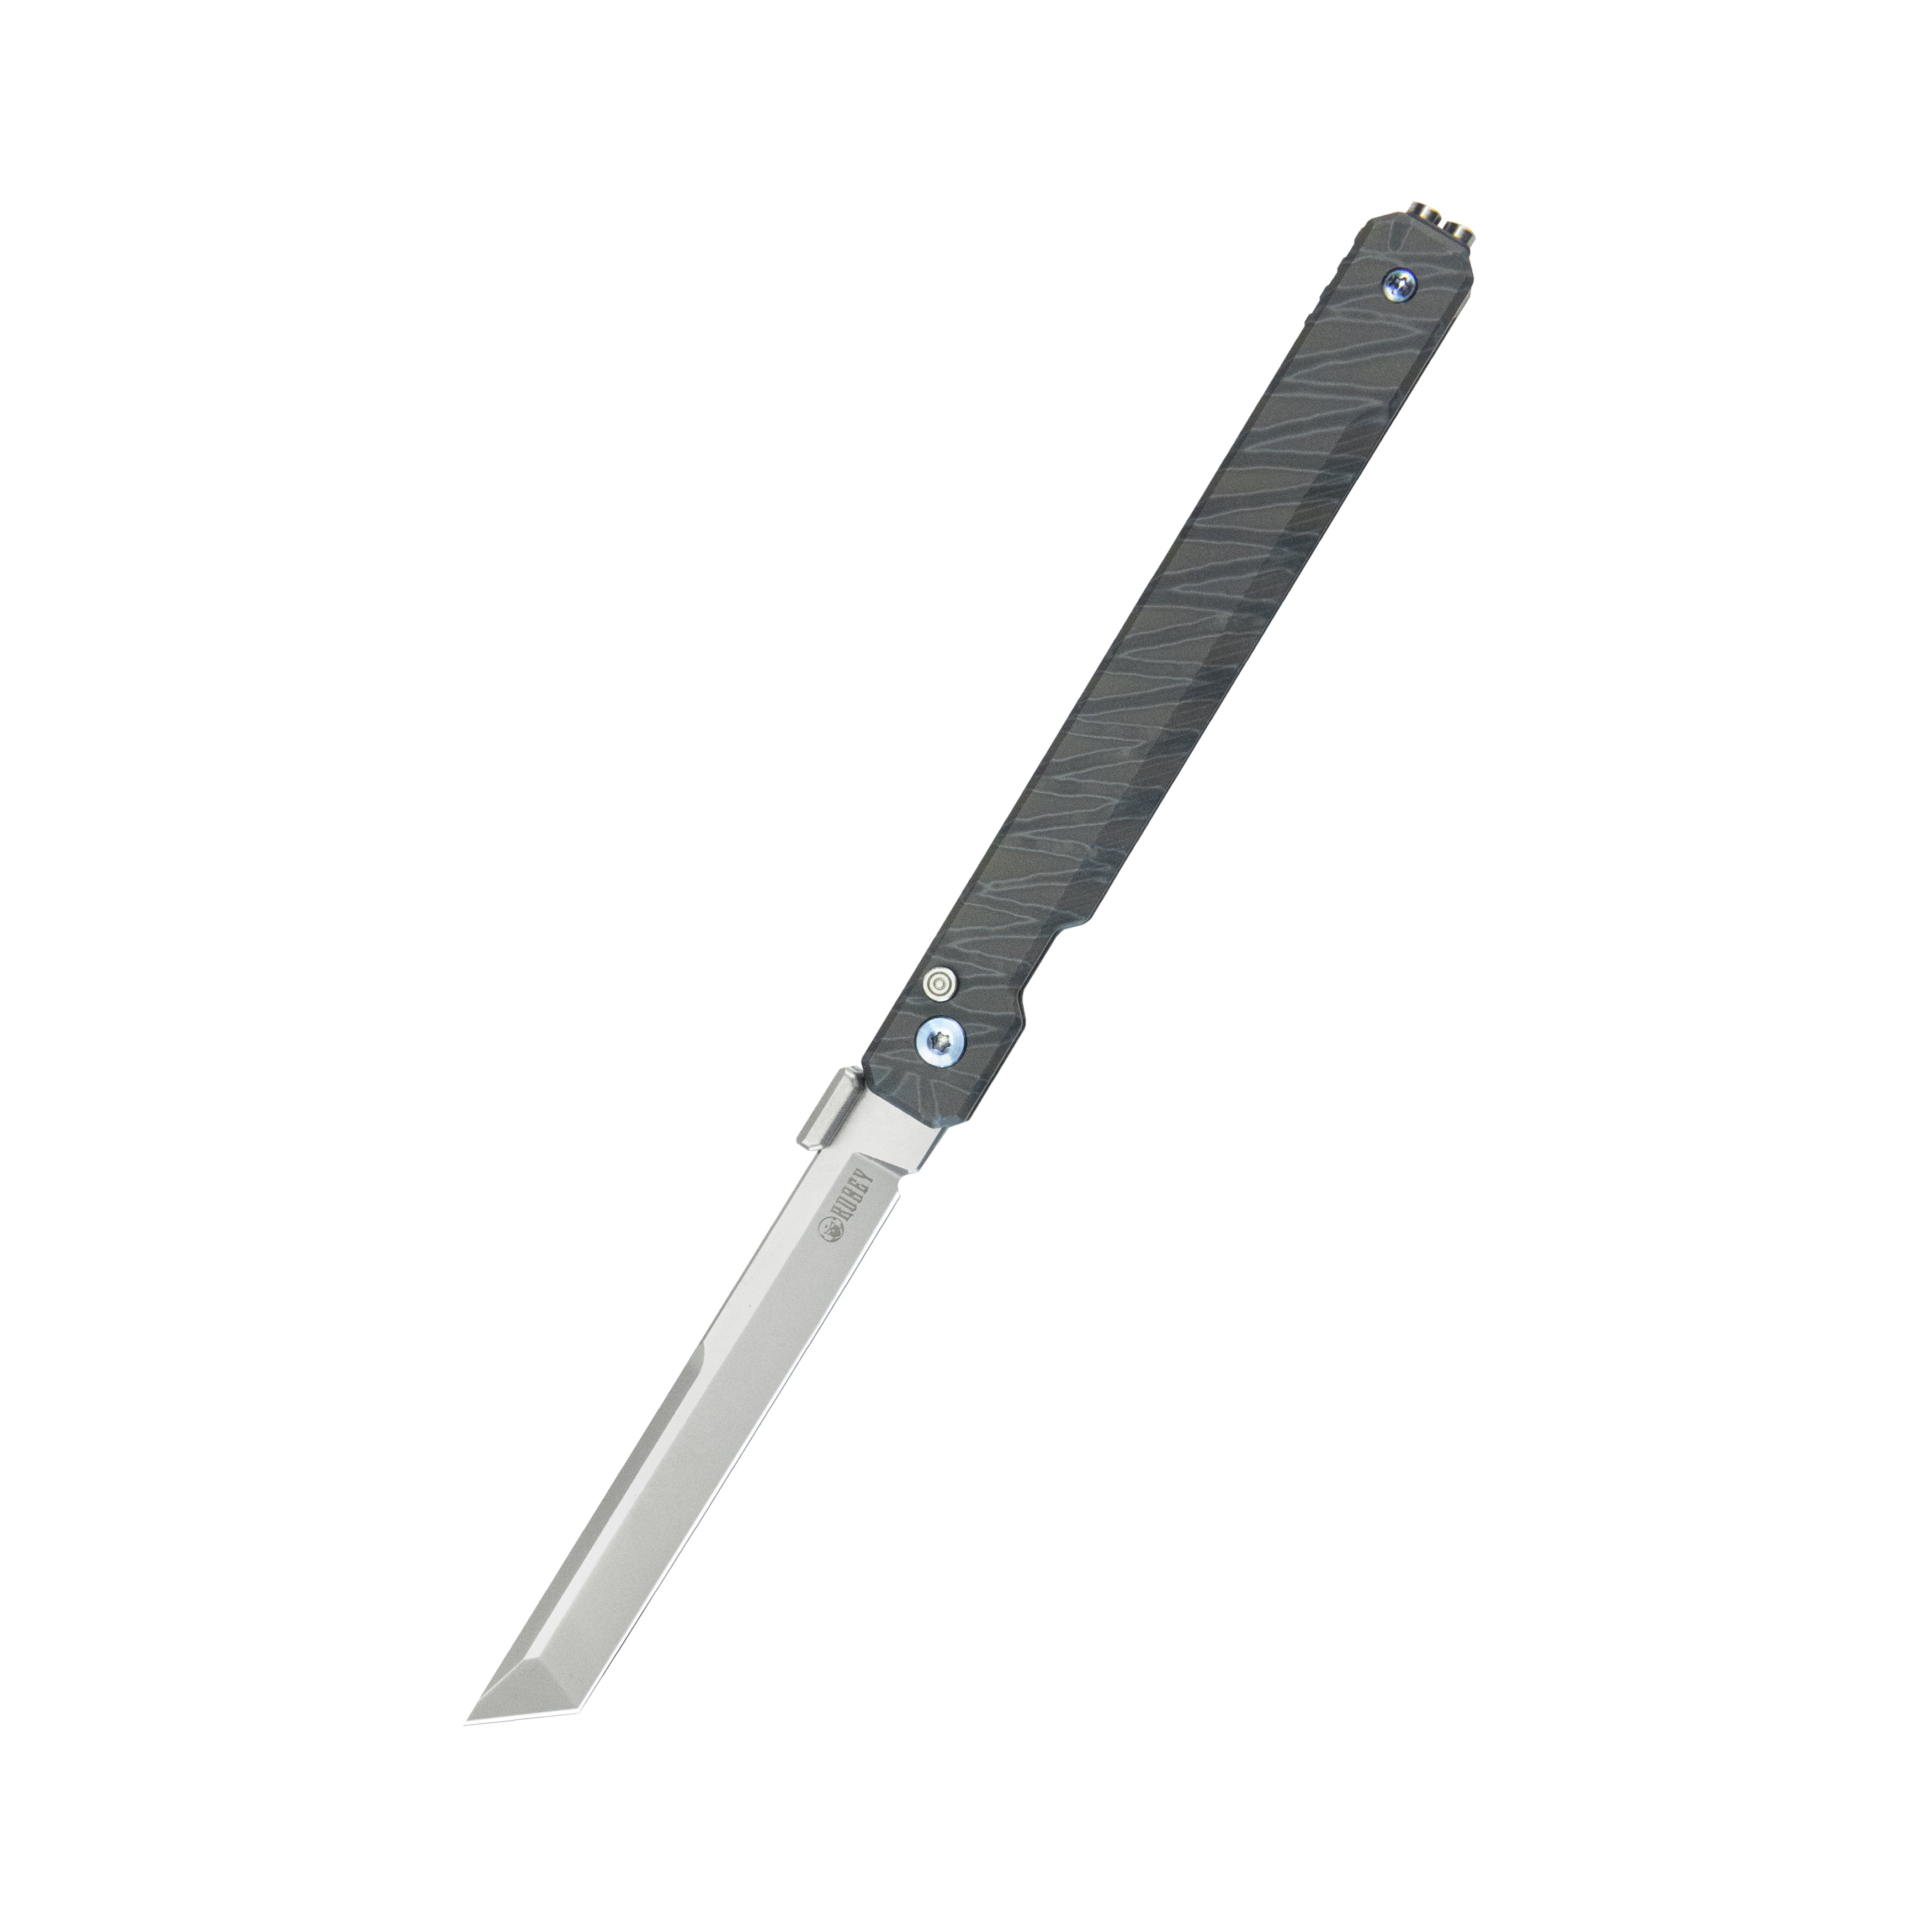 Kubey Prism Button Lock CEO Style Folding Knife Flame 6AL4V Titanium Handle 3.54'' Beadblast 14C28N KB243C